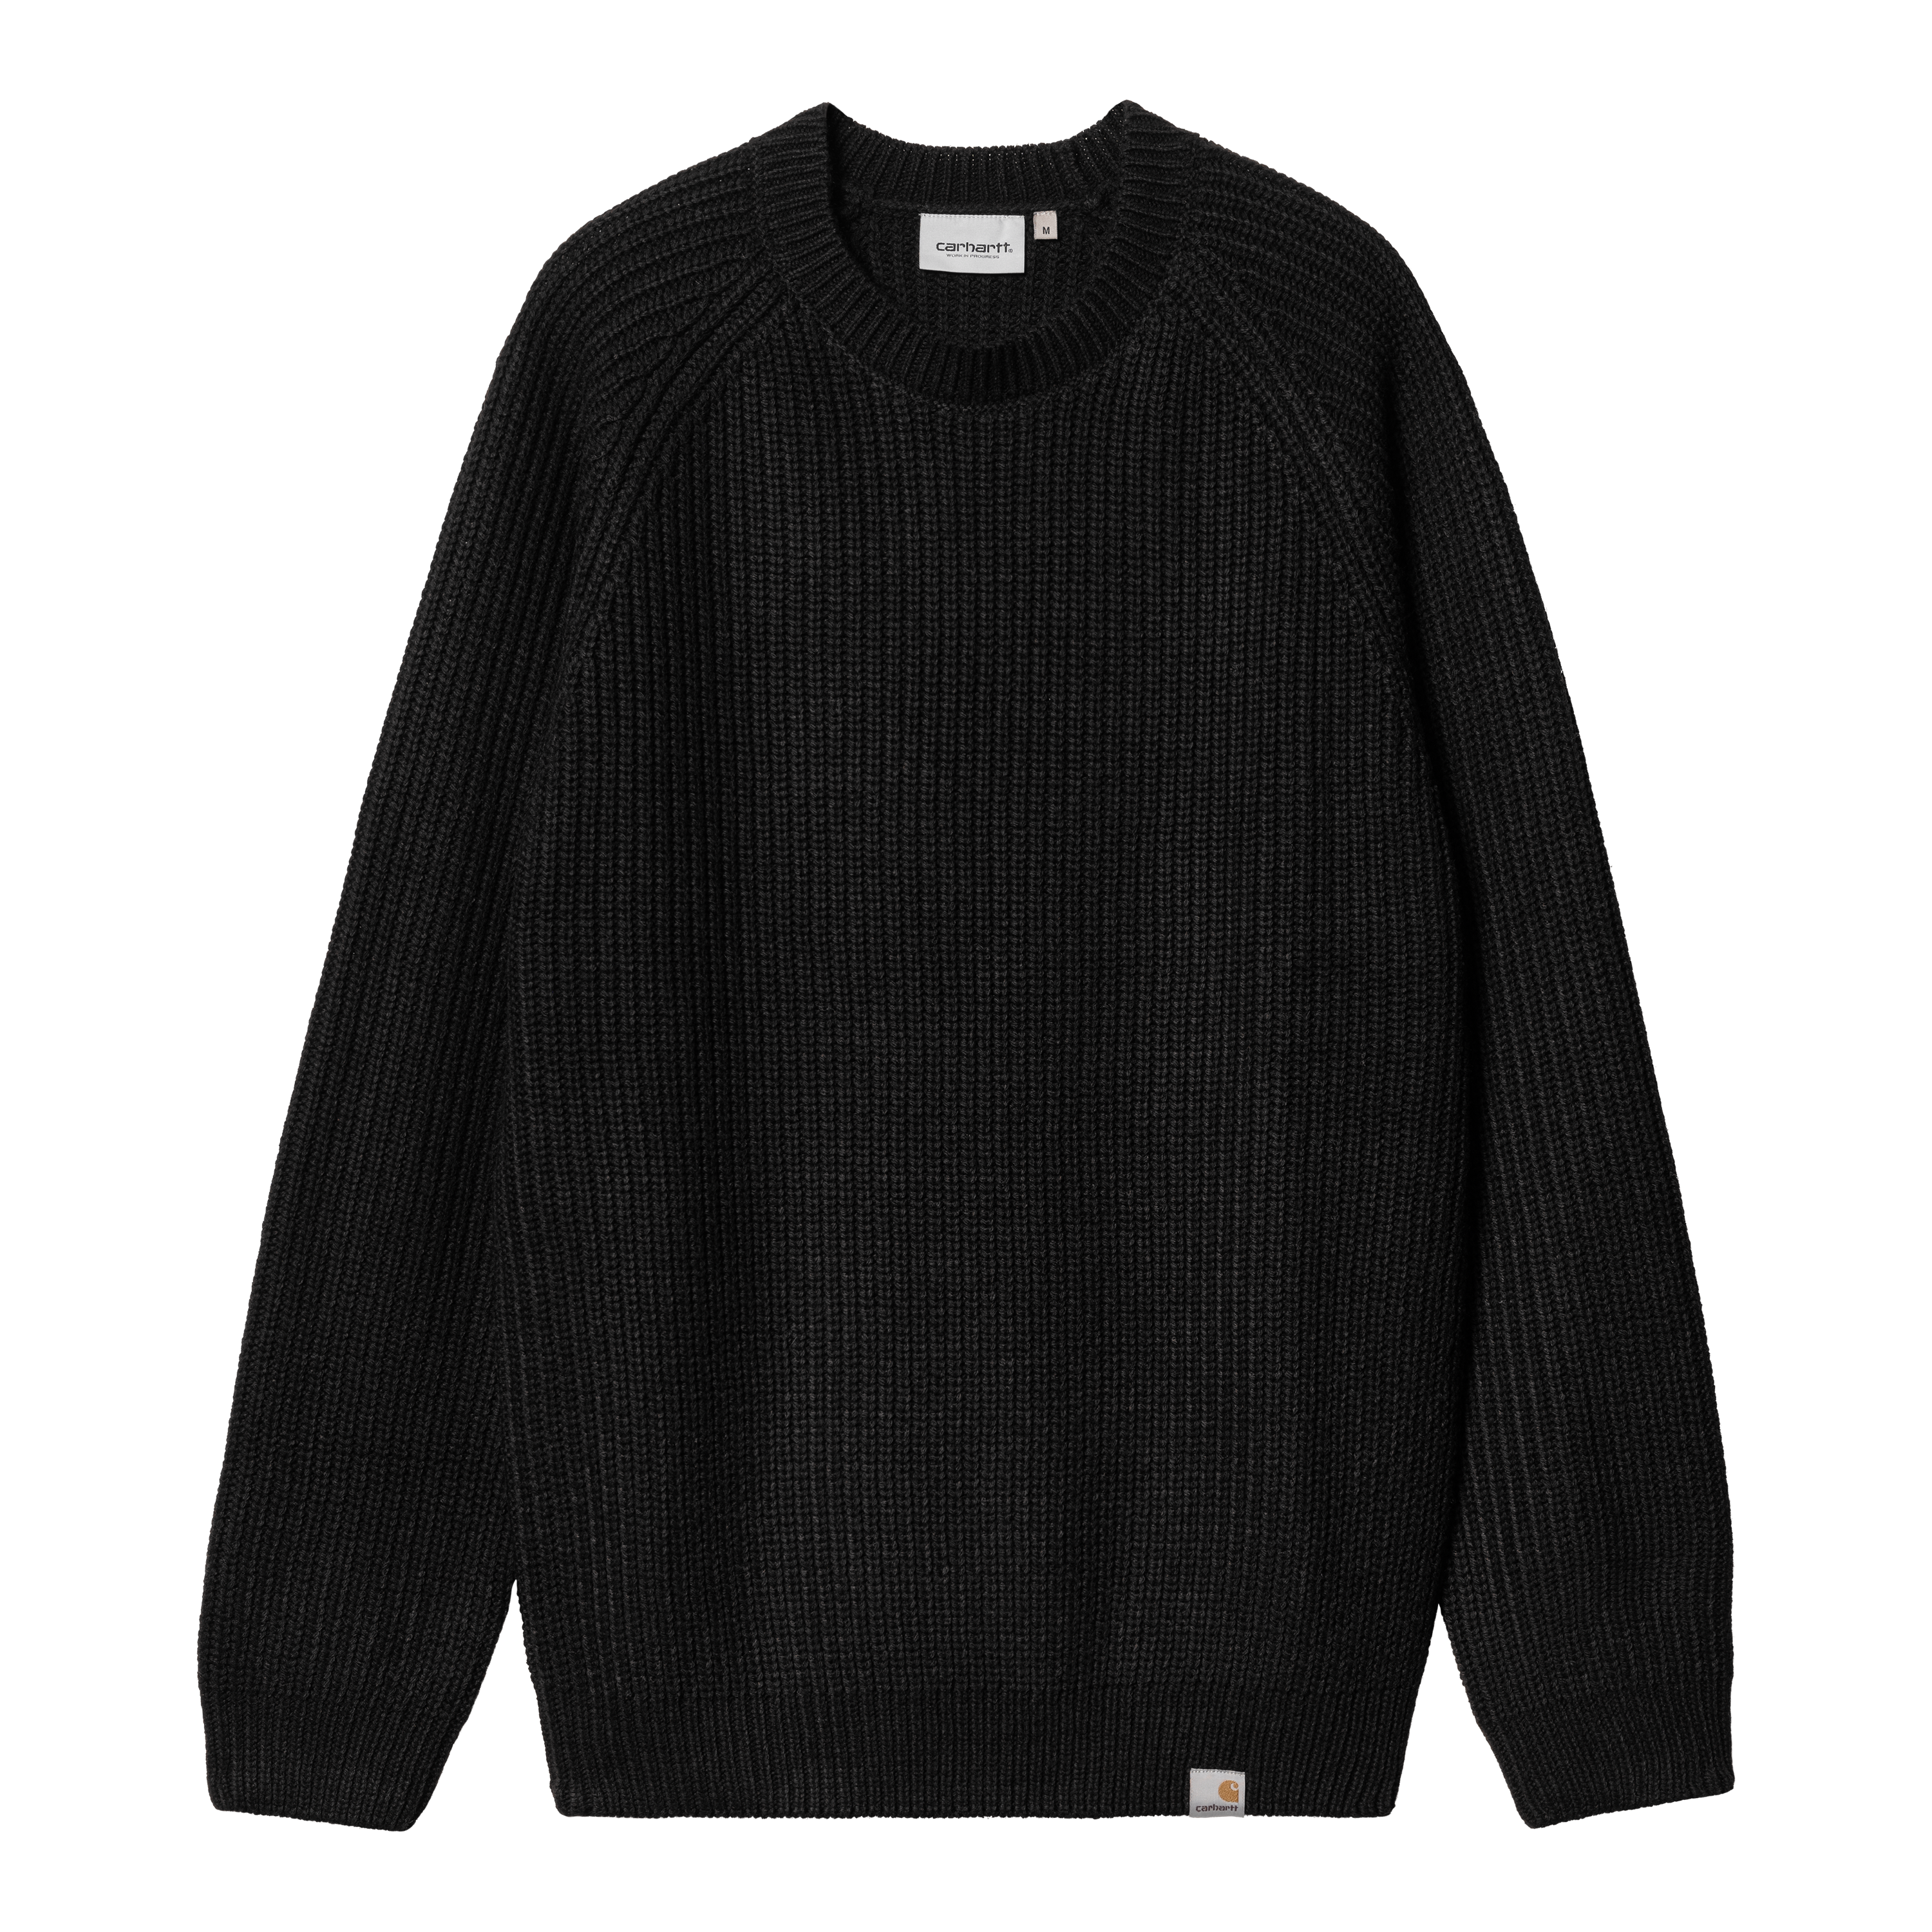 Carhartt WIP Forth Sweater in Schwarz